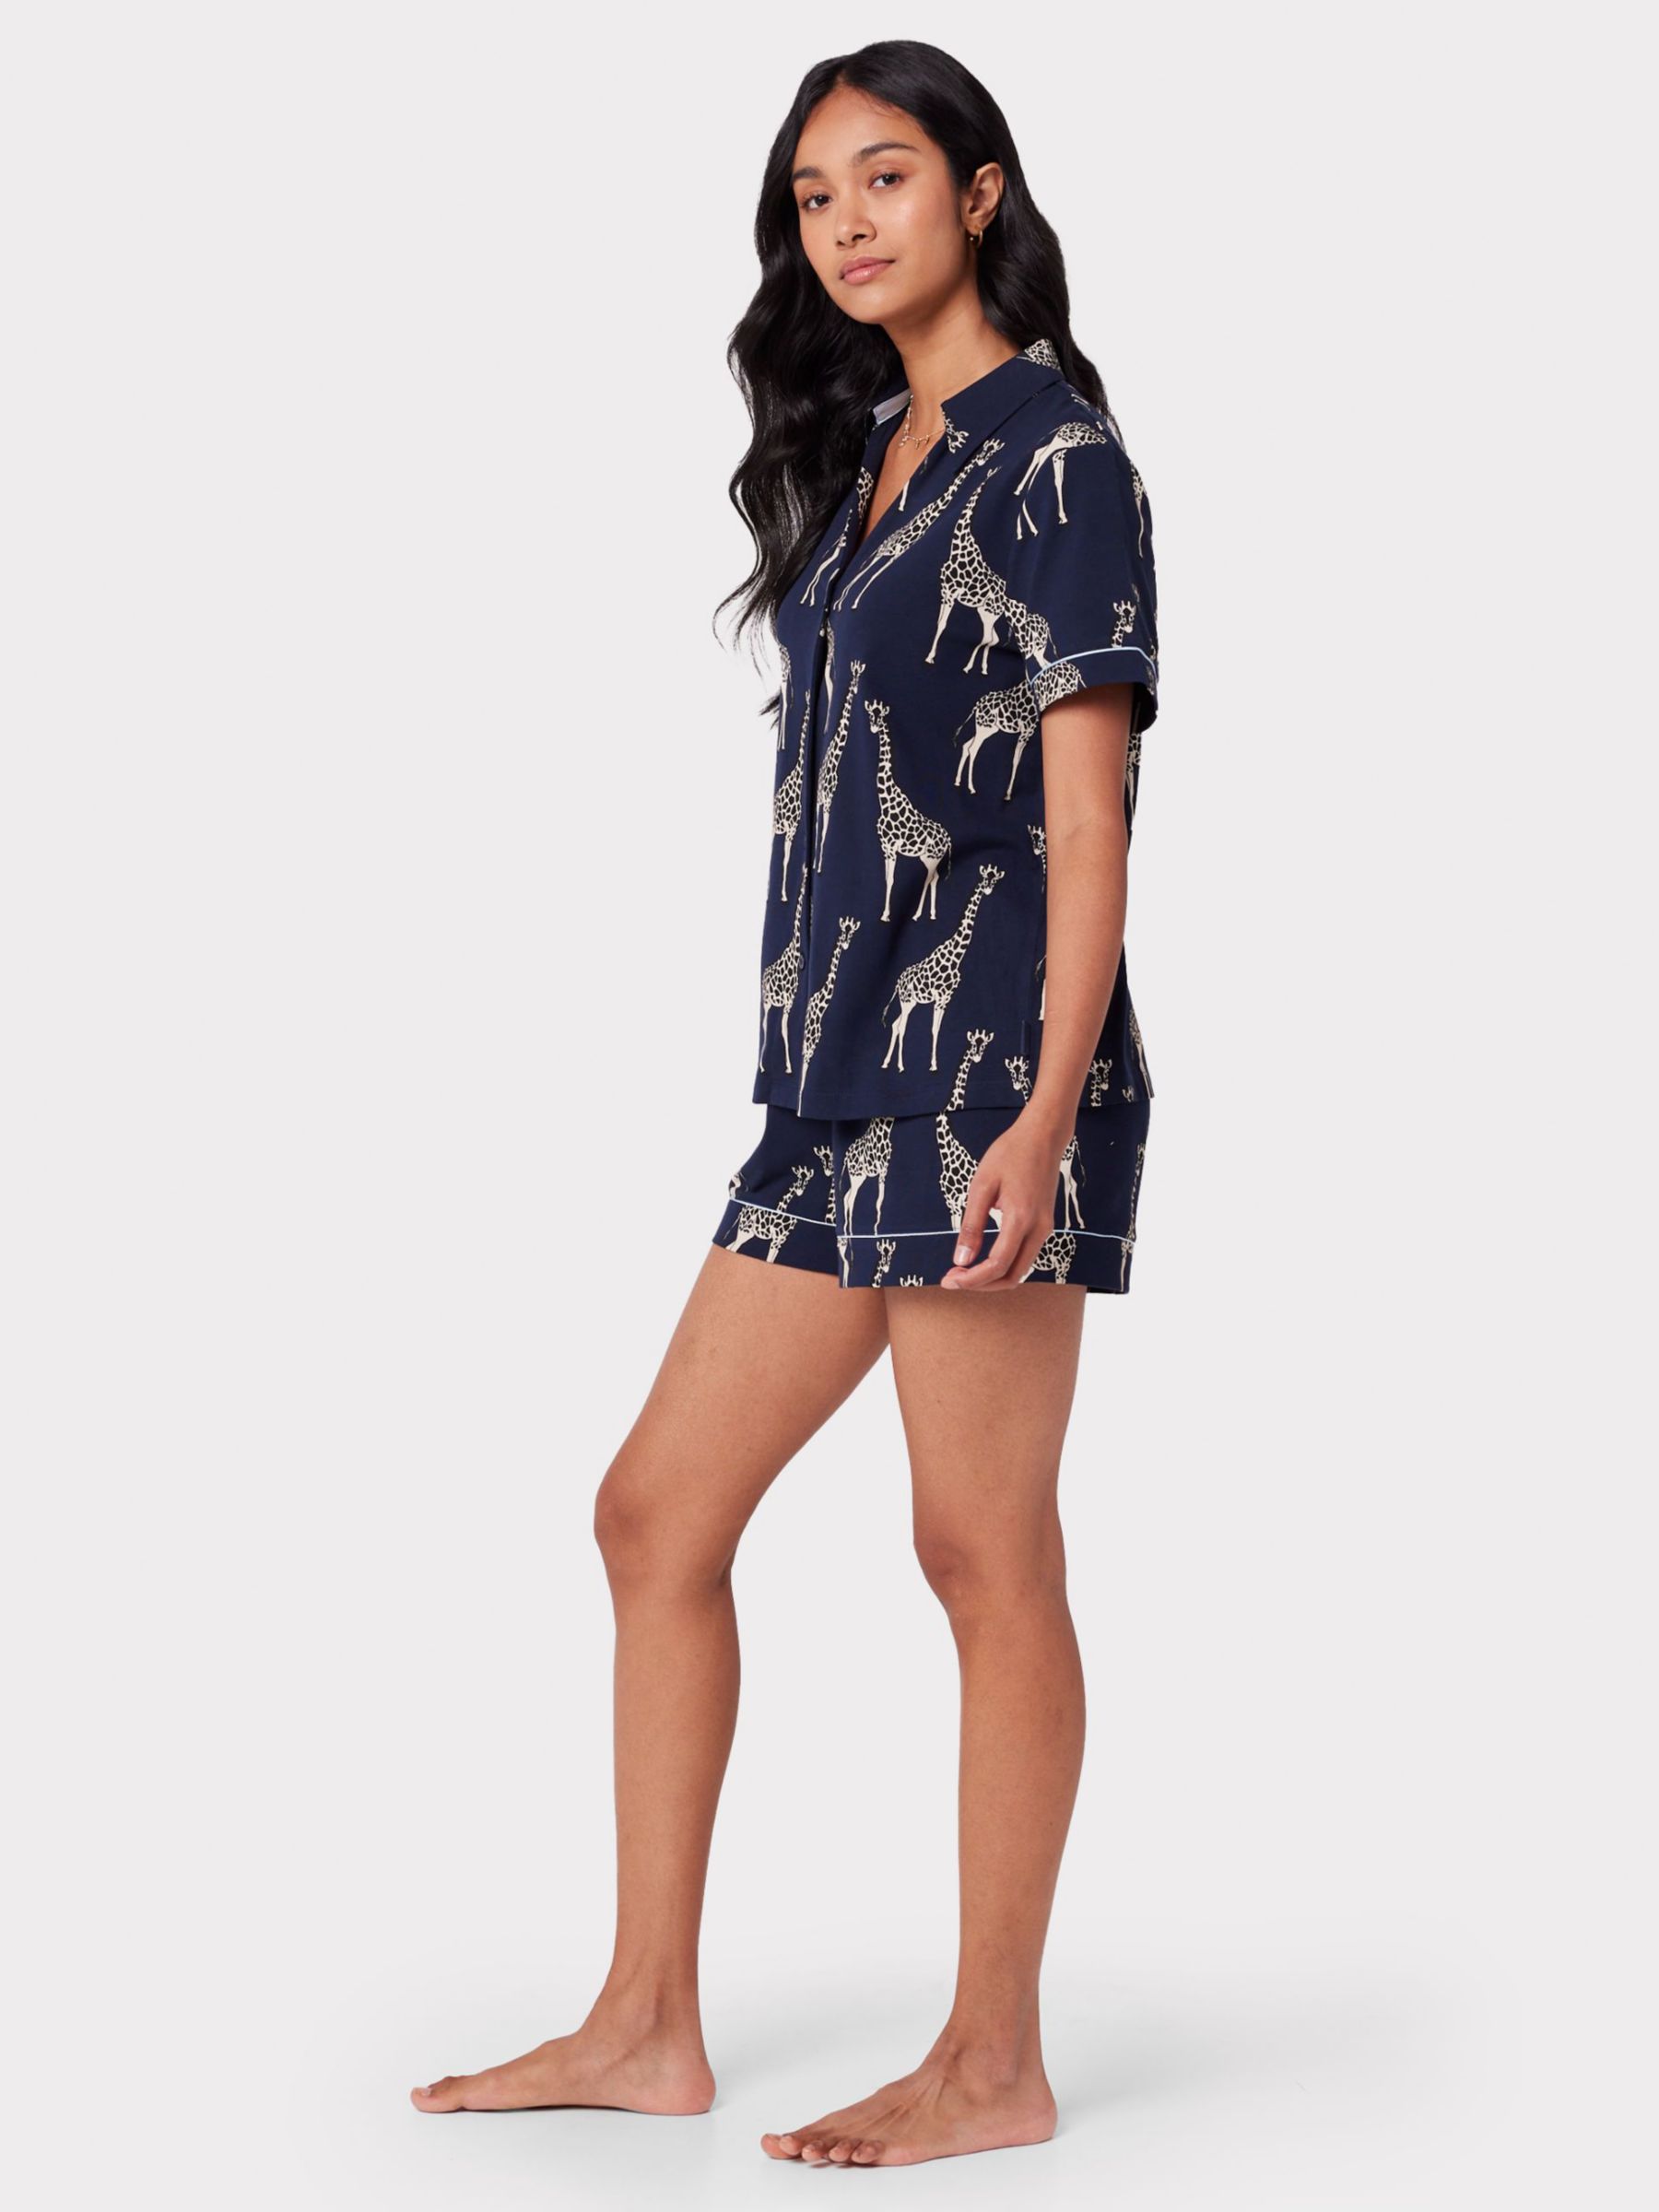 Buy Chelsea Peers Organic Cotton Blend Giraffe Print Shorts Pyjama Set, Navy Online at johnlewis.com